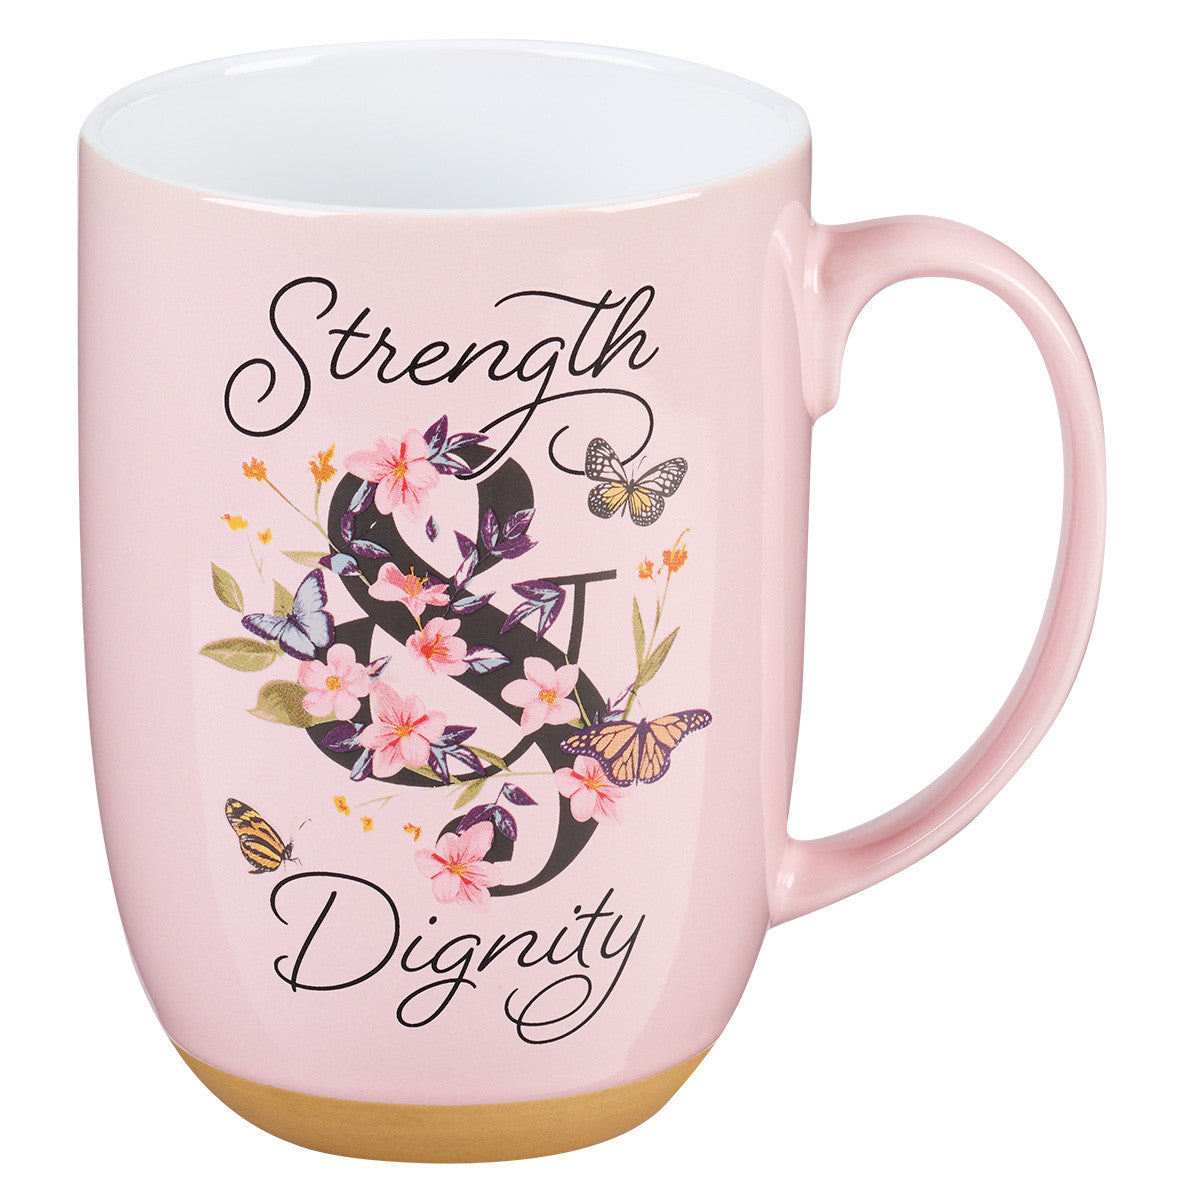 Strength &amp; dignity mug